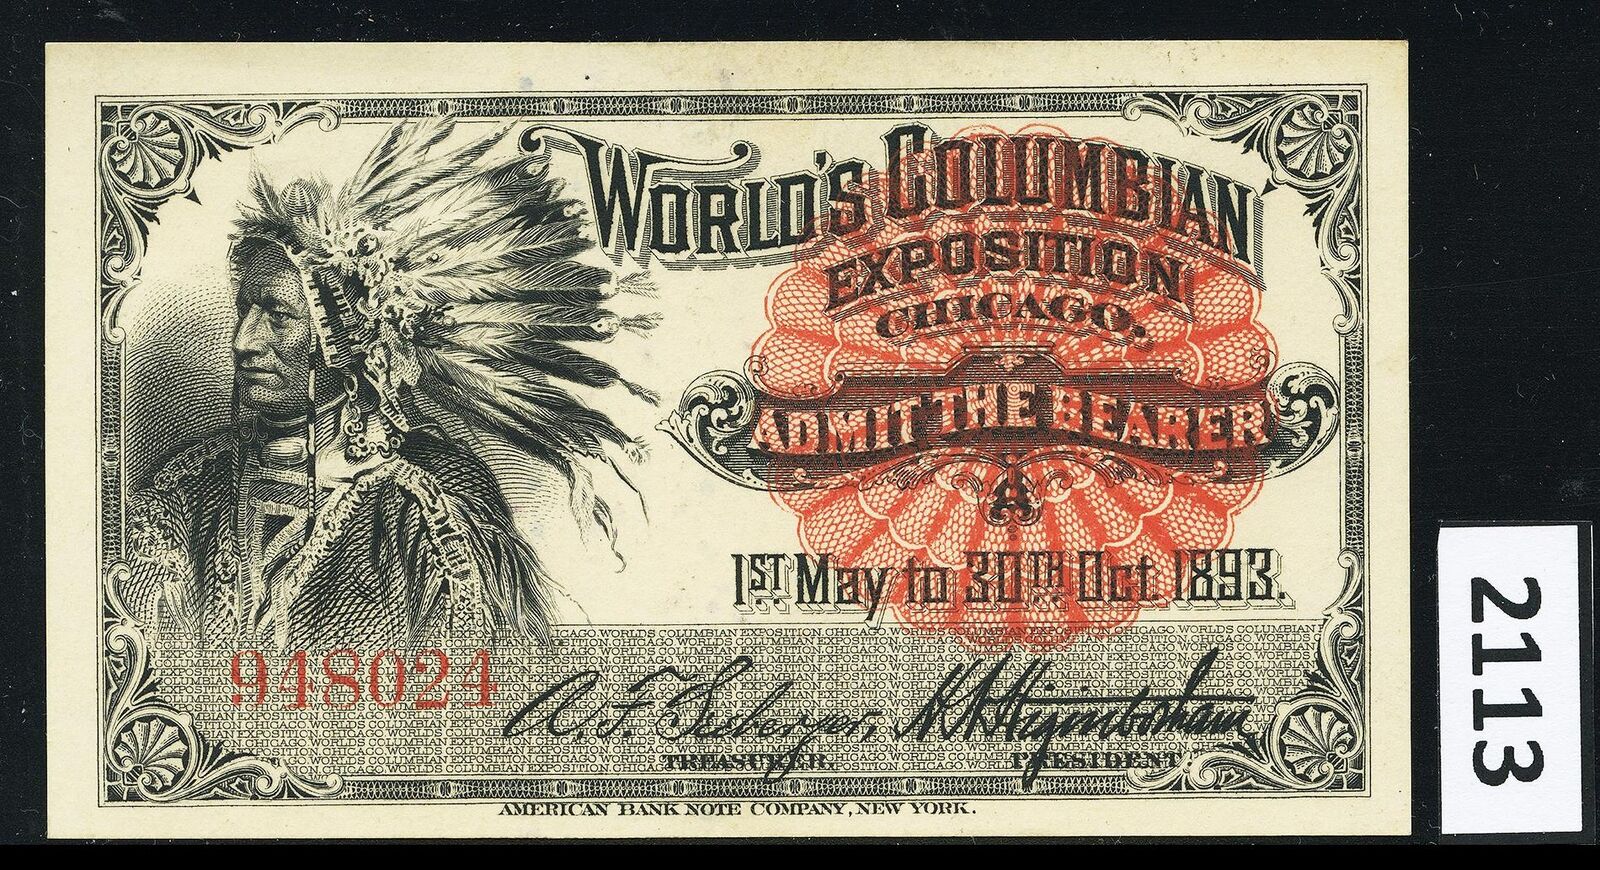 Dealer Dave Columbian Exposition 1893, INDIAN PORTRAIT TICKET, EXCELLENT (2113)